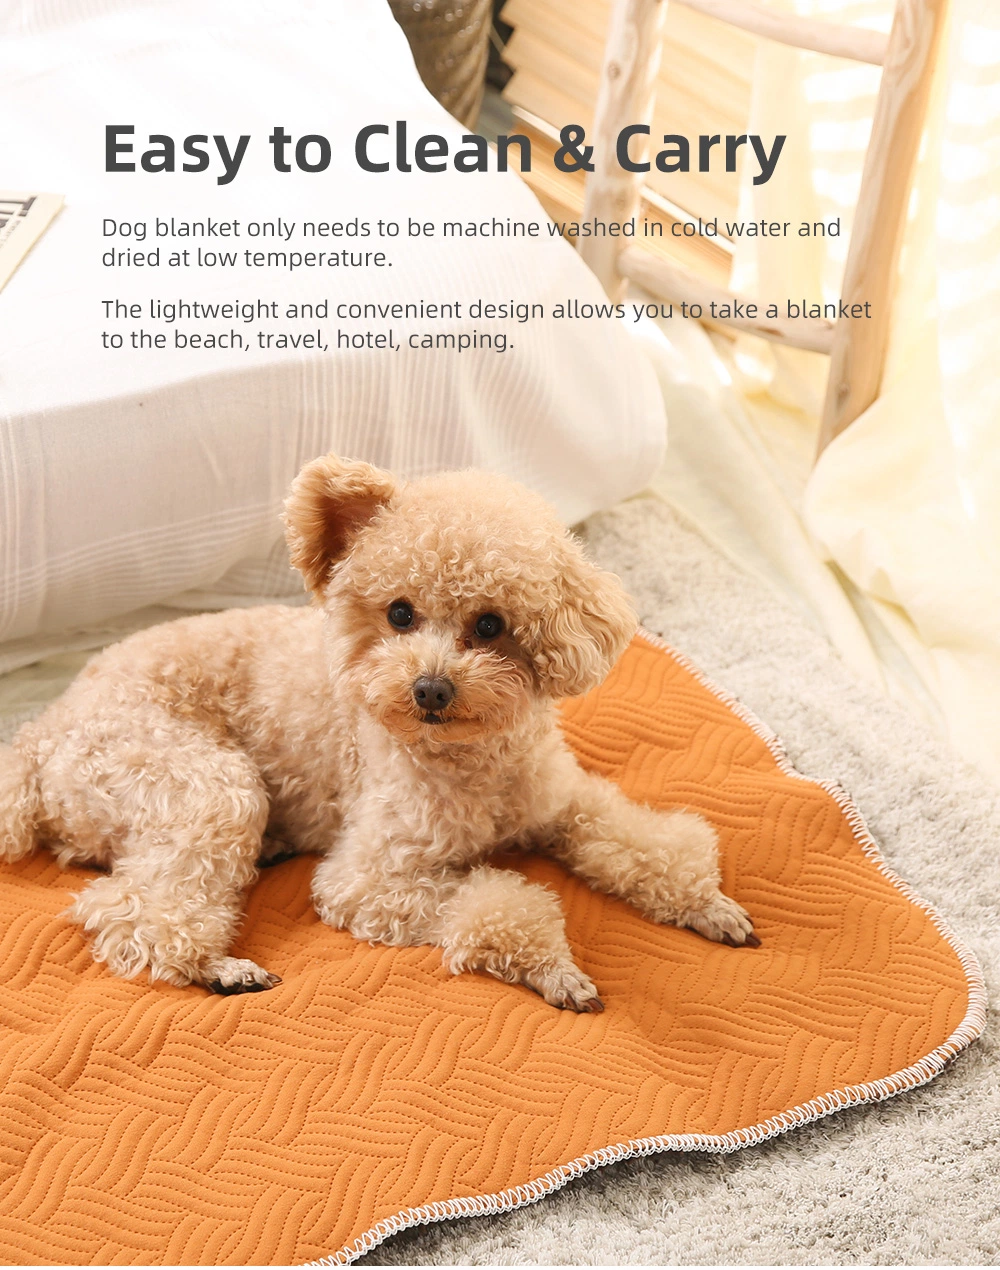 Factory Customize Ultrasonic Embossing Warm Plush Pet Blanket Reversible Cozy Dog Mat